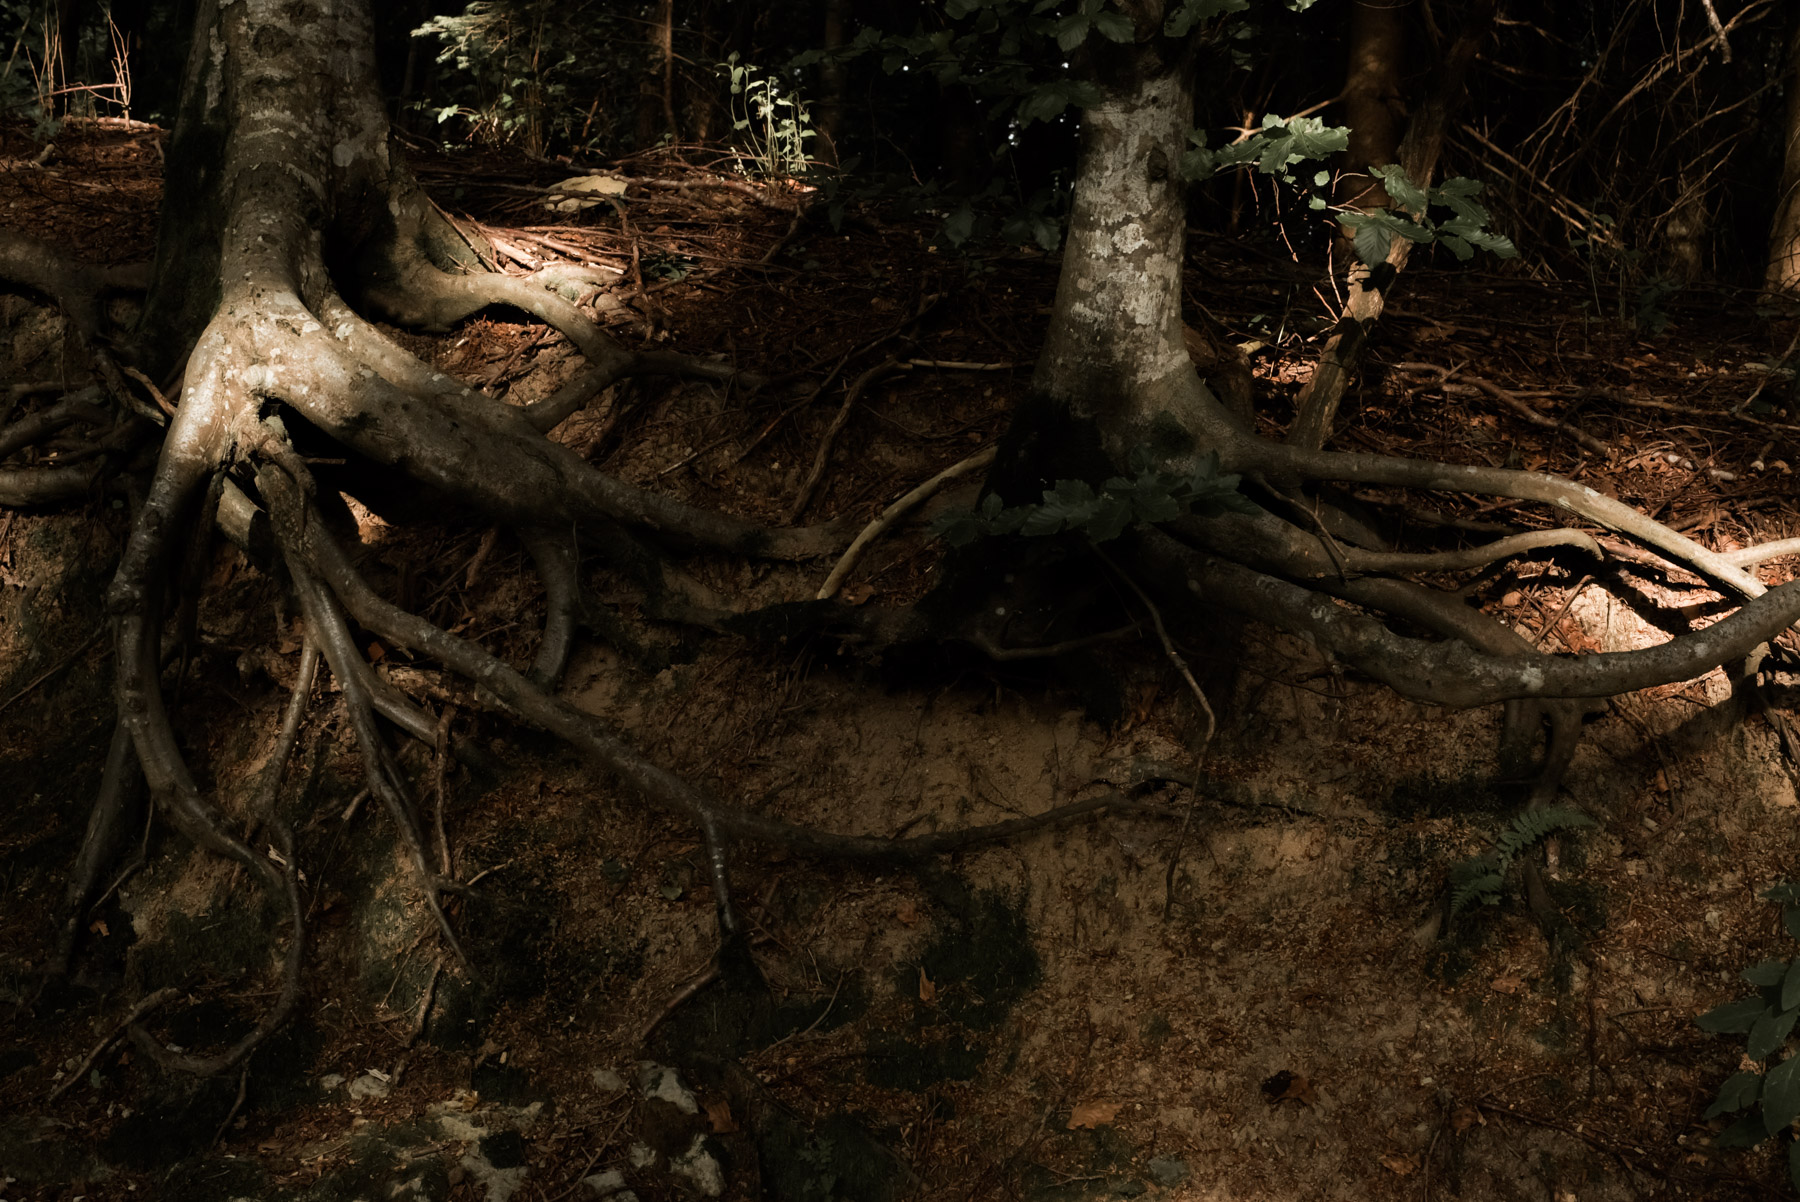 Detail of tree roots in a forest, dettaglio di radici in una foresta